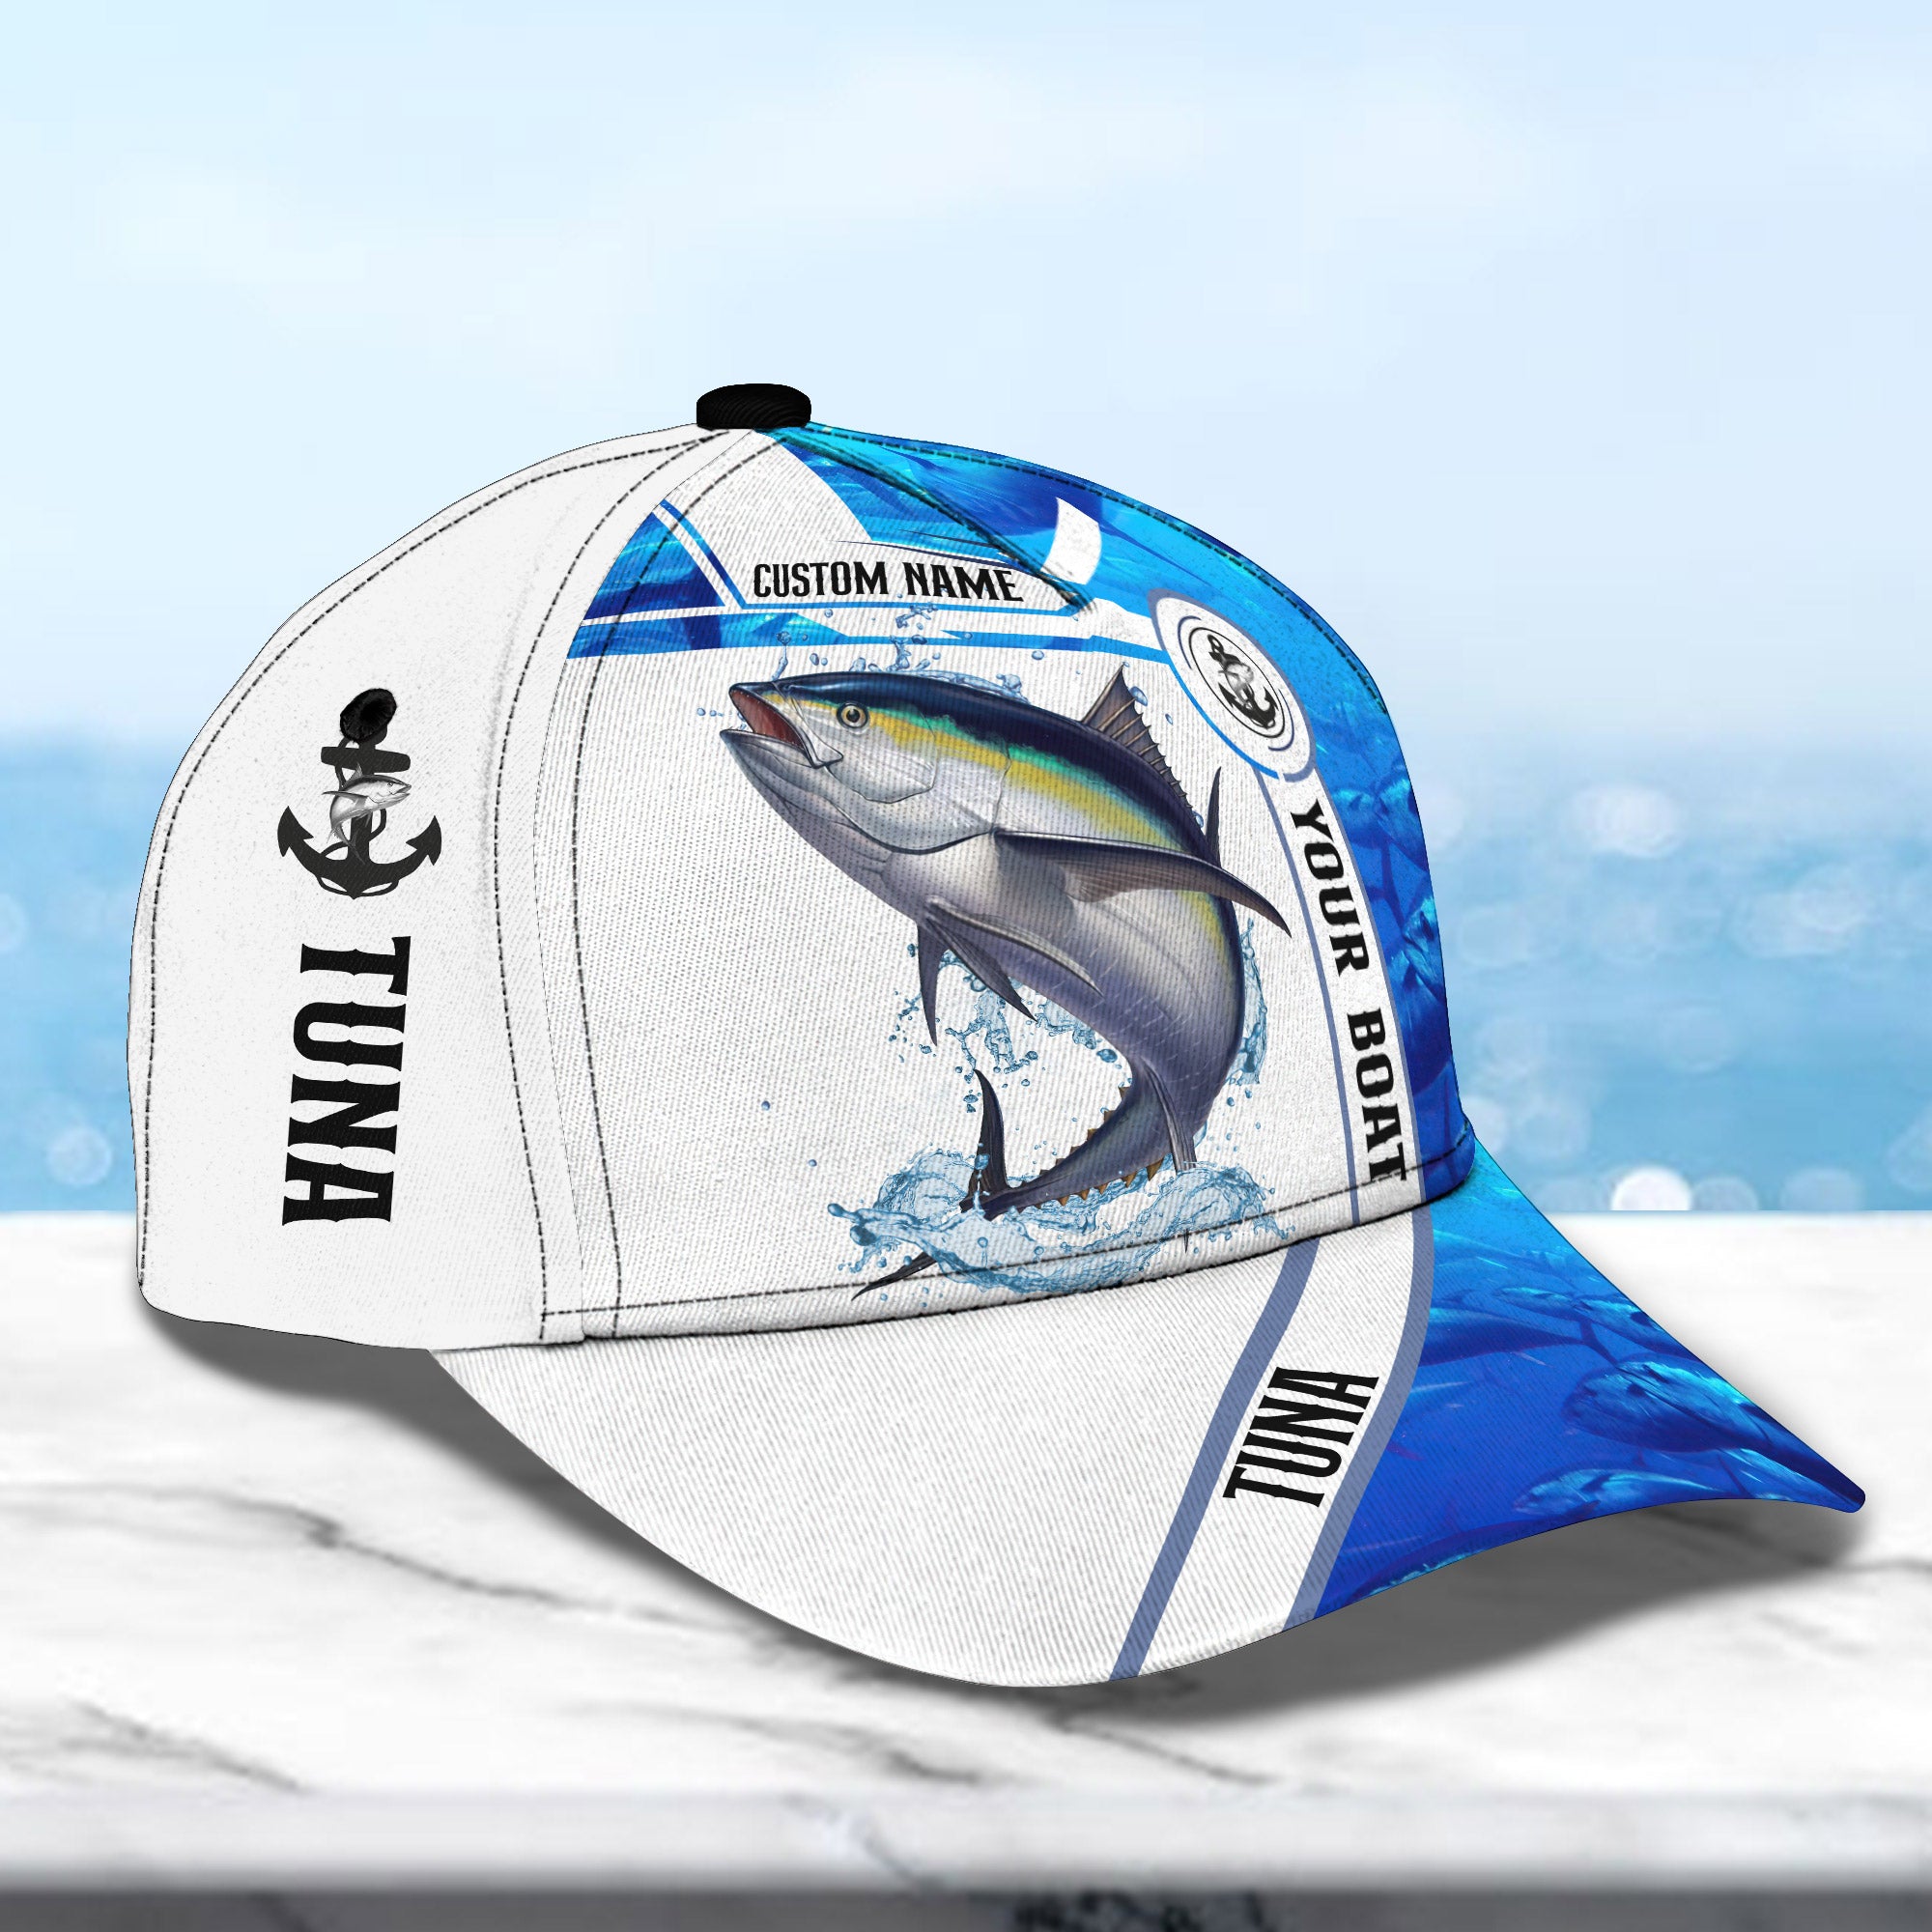 Tuna Ocean Fishing 2 - Personalized Name Cap - Nt168 - Ct071